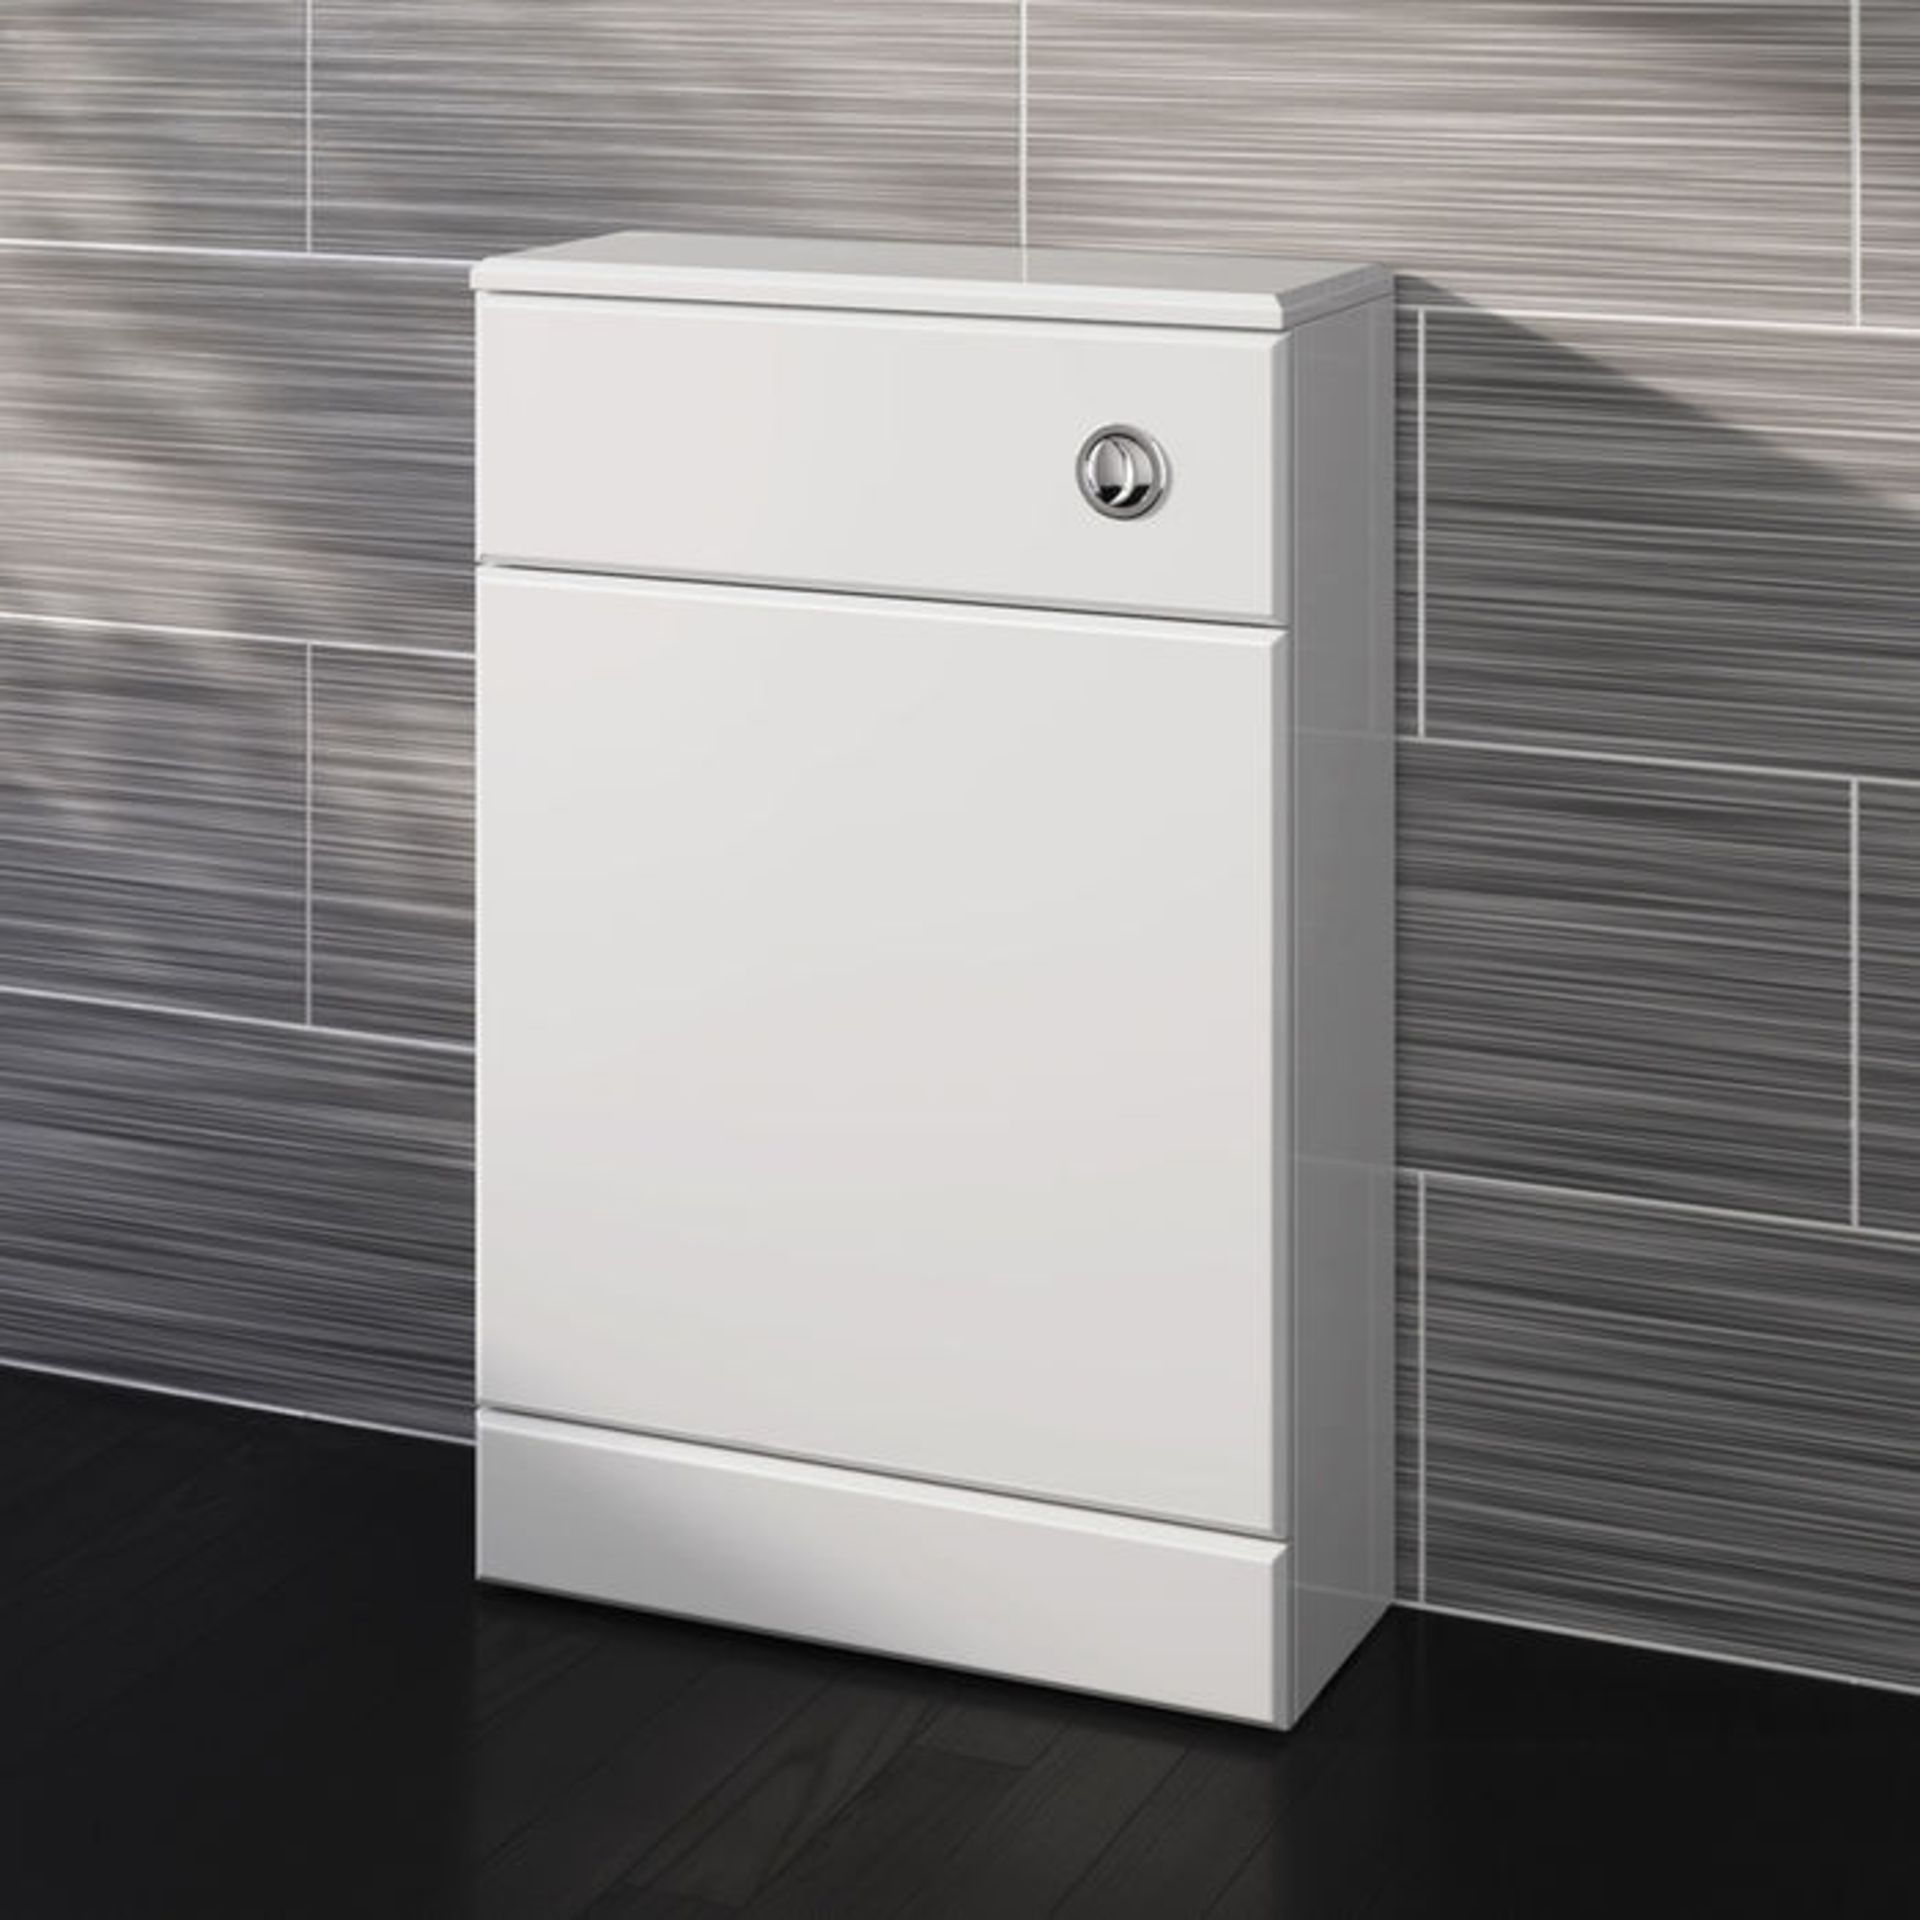 (XM37) 500x200mm Quartz Gloss White Back To Wall Toilet Unit. Pristine gloss white finish Conceals - Image 2 of 3